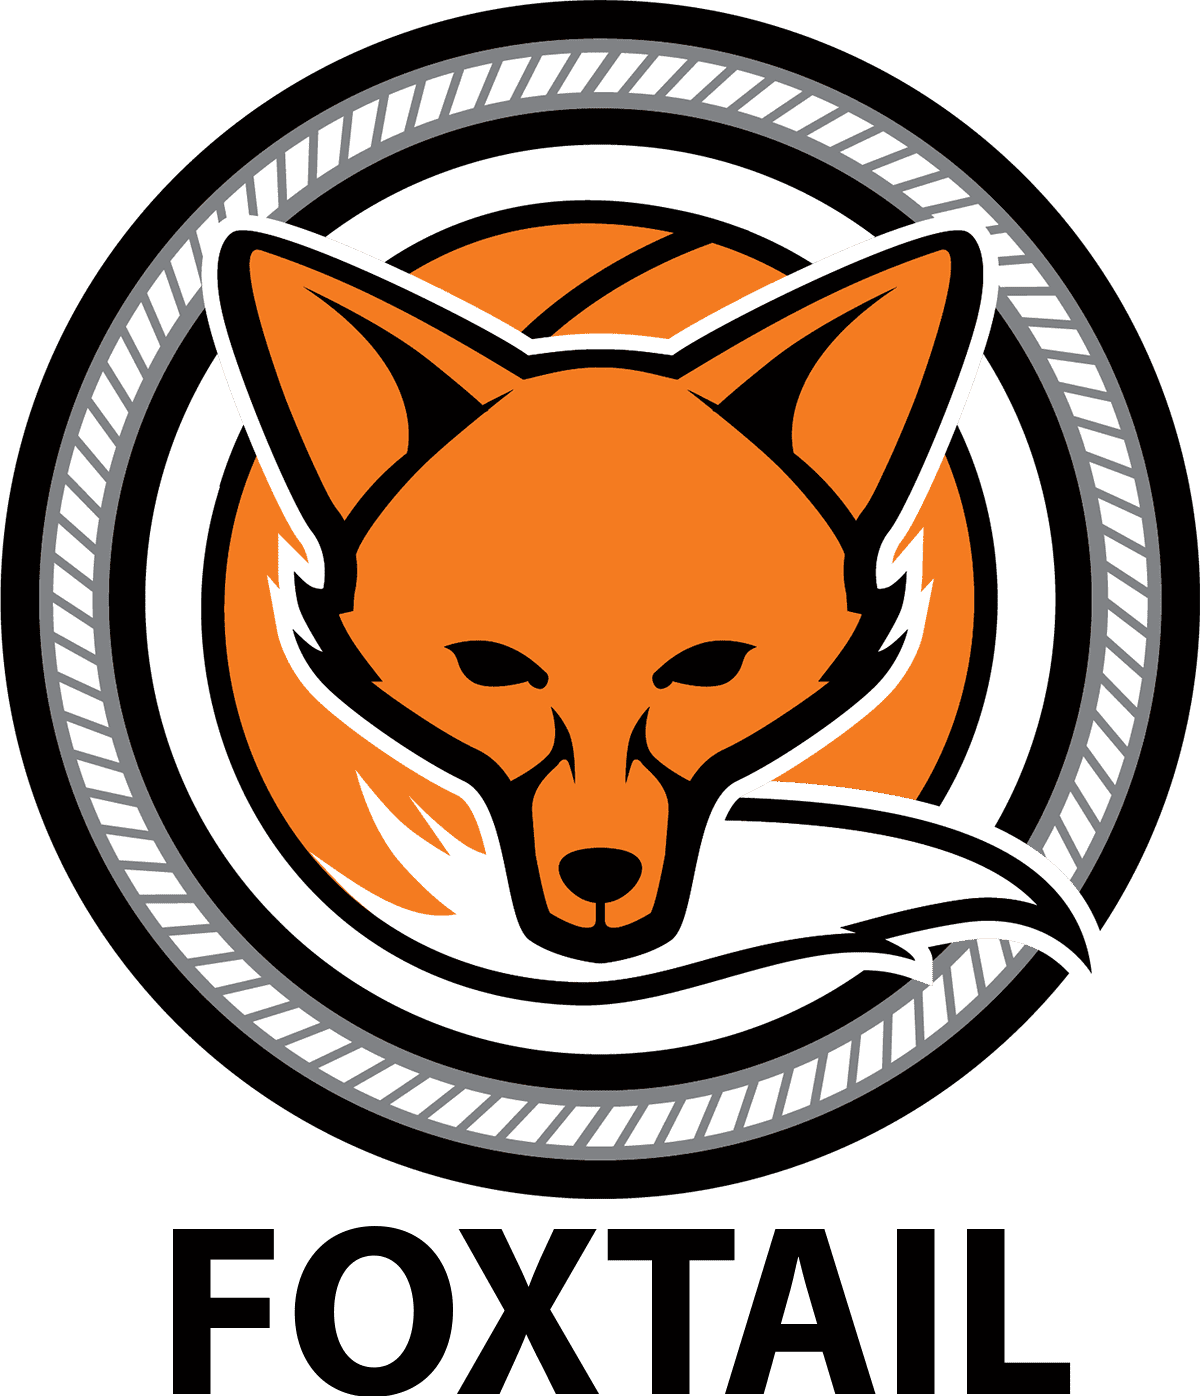 The Foxtail Community | New Housing Developments in Post Falls, Idaho